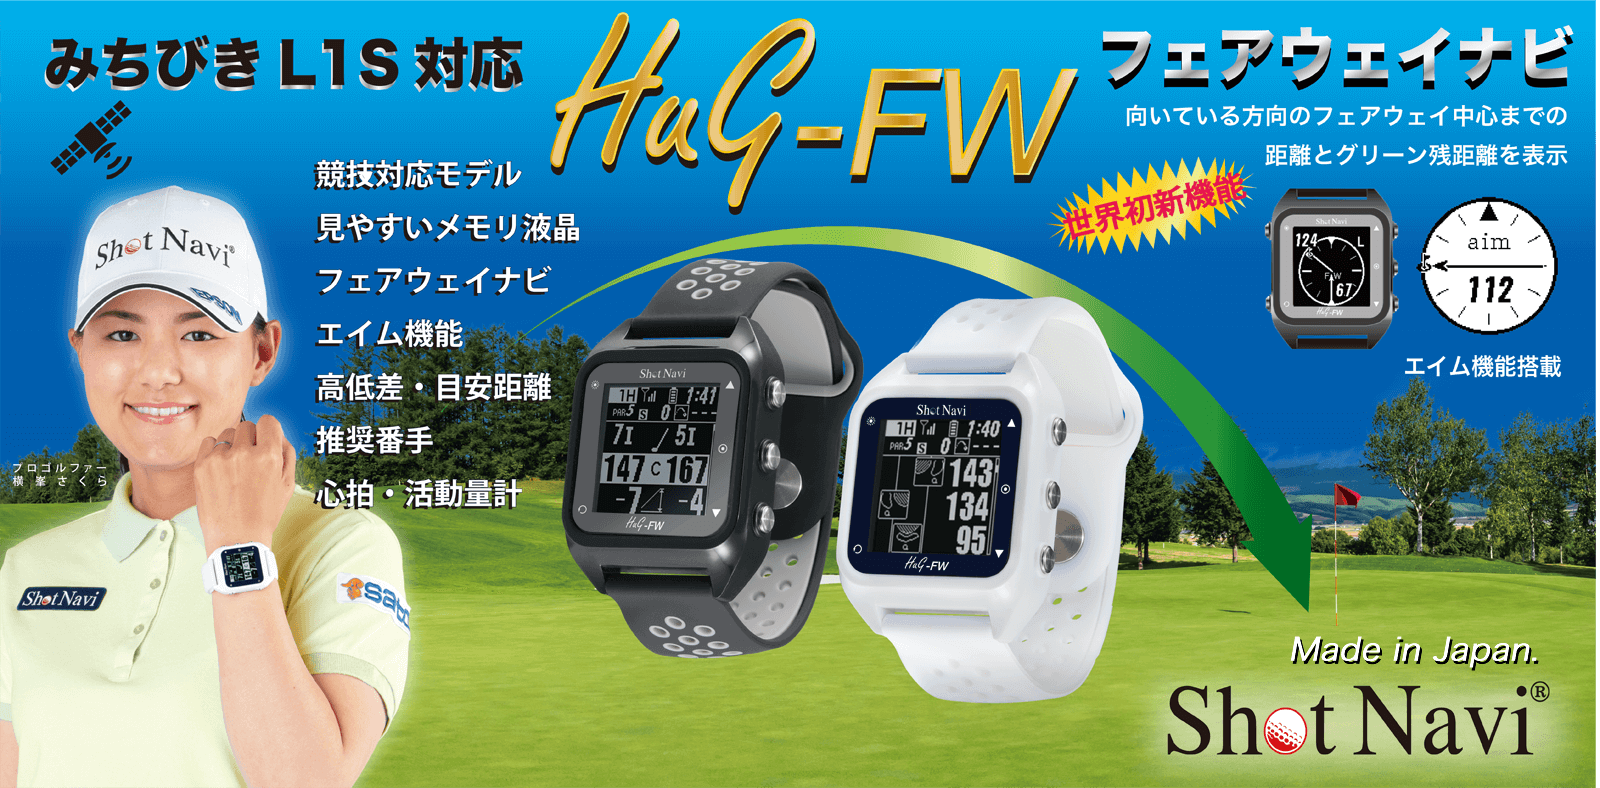 Shot Navi HuG-FW | みちびきL1S対応 日本製GPSゴルフナビ